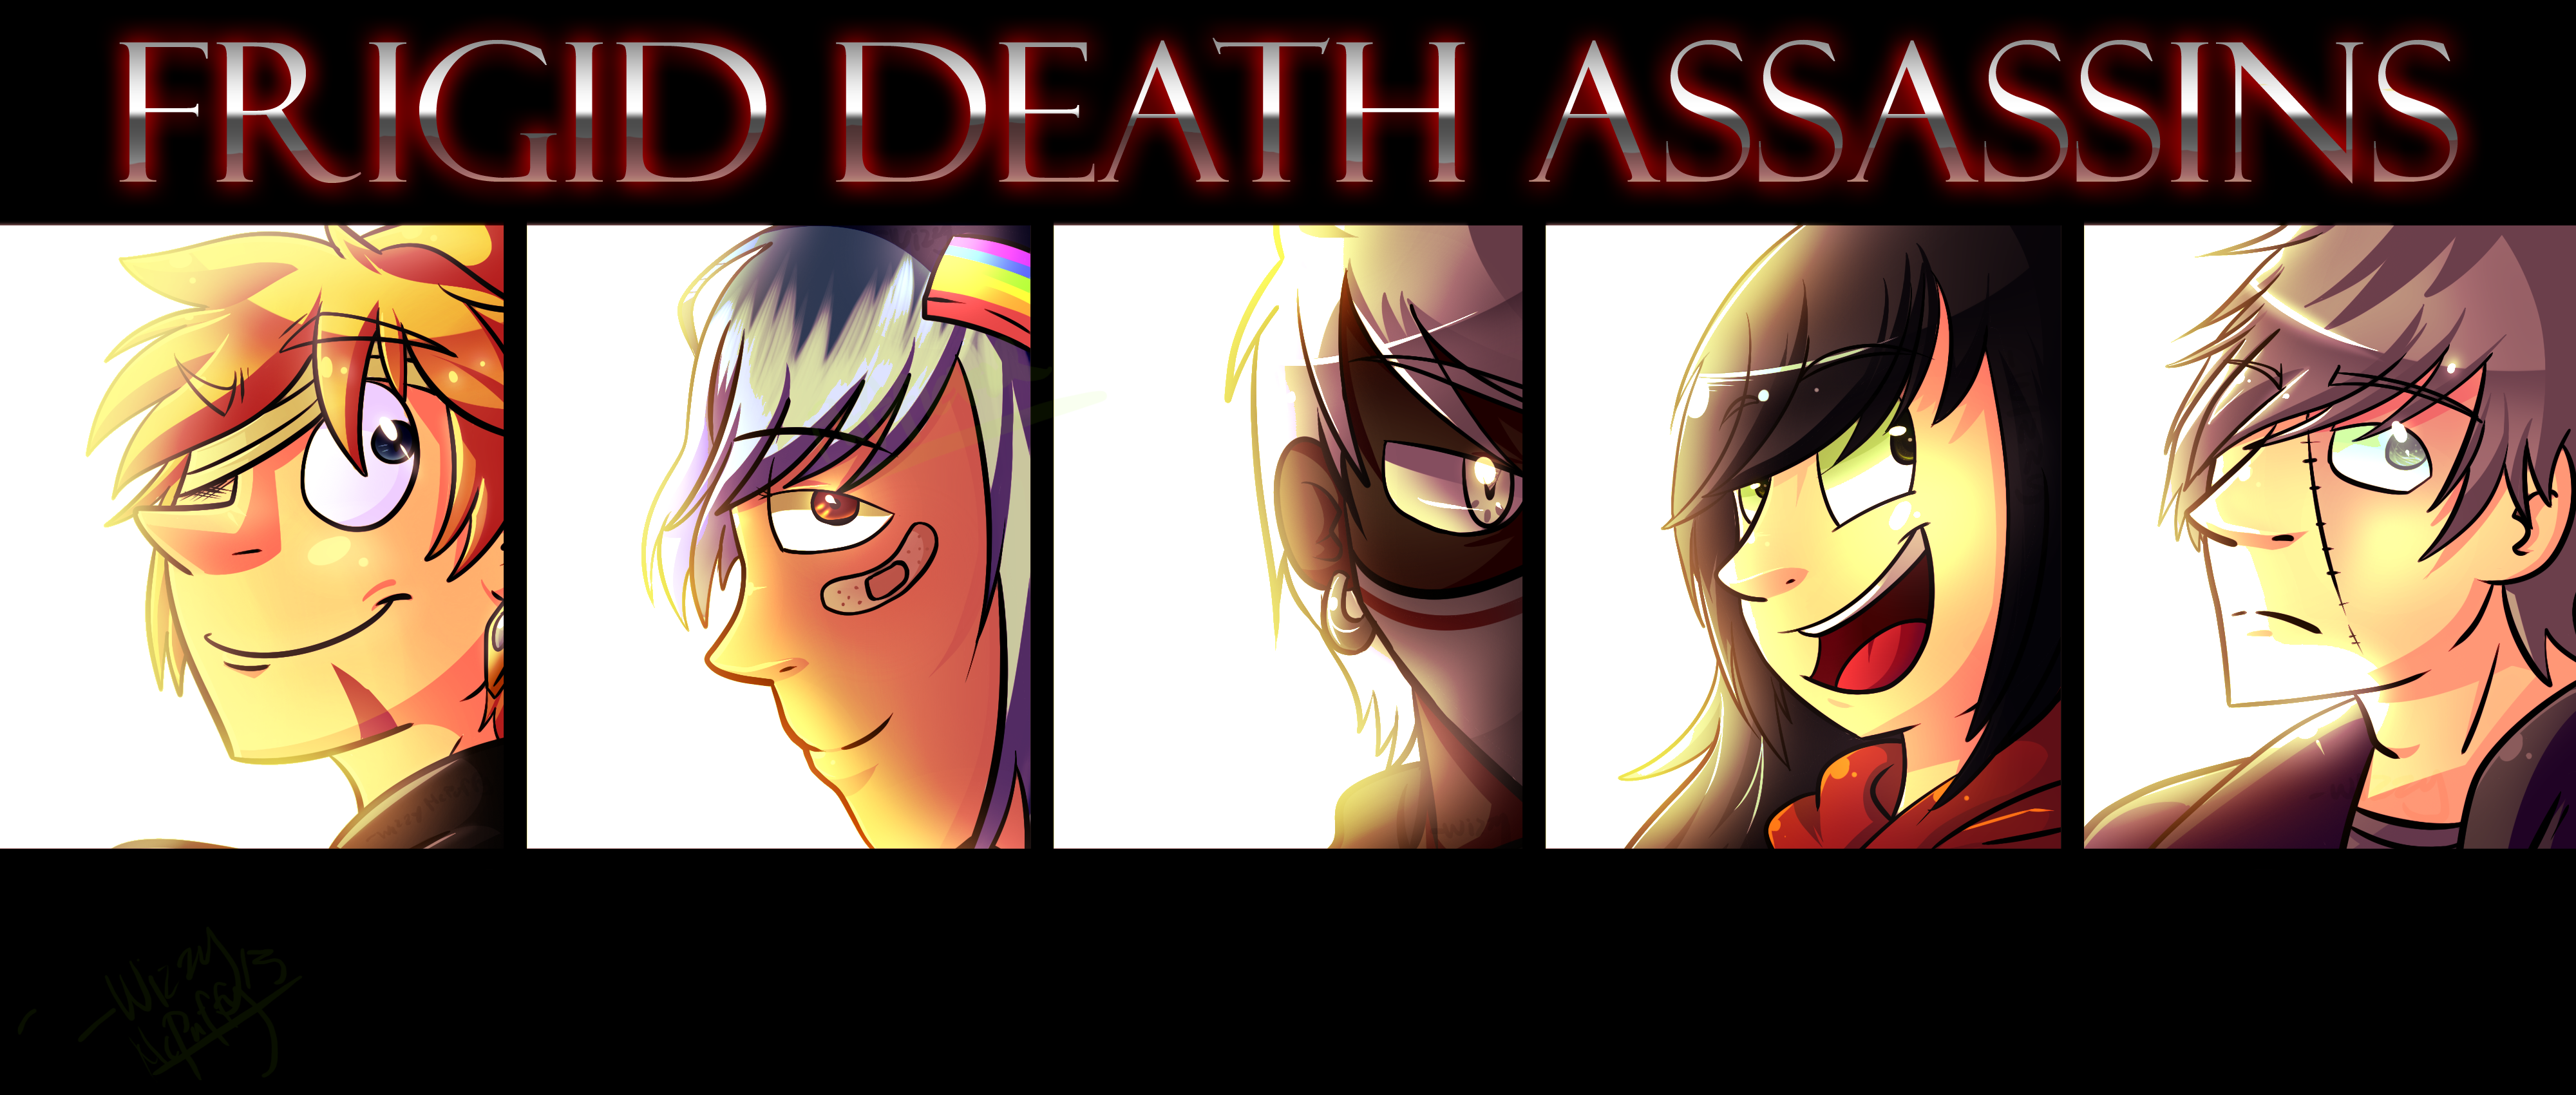 Frigid Death Assassins